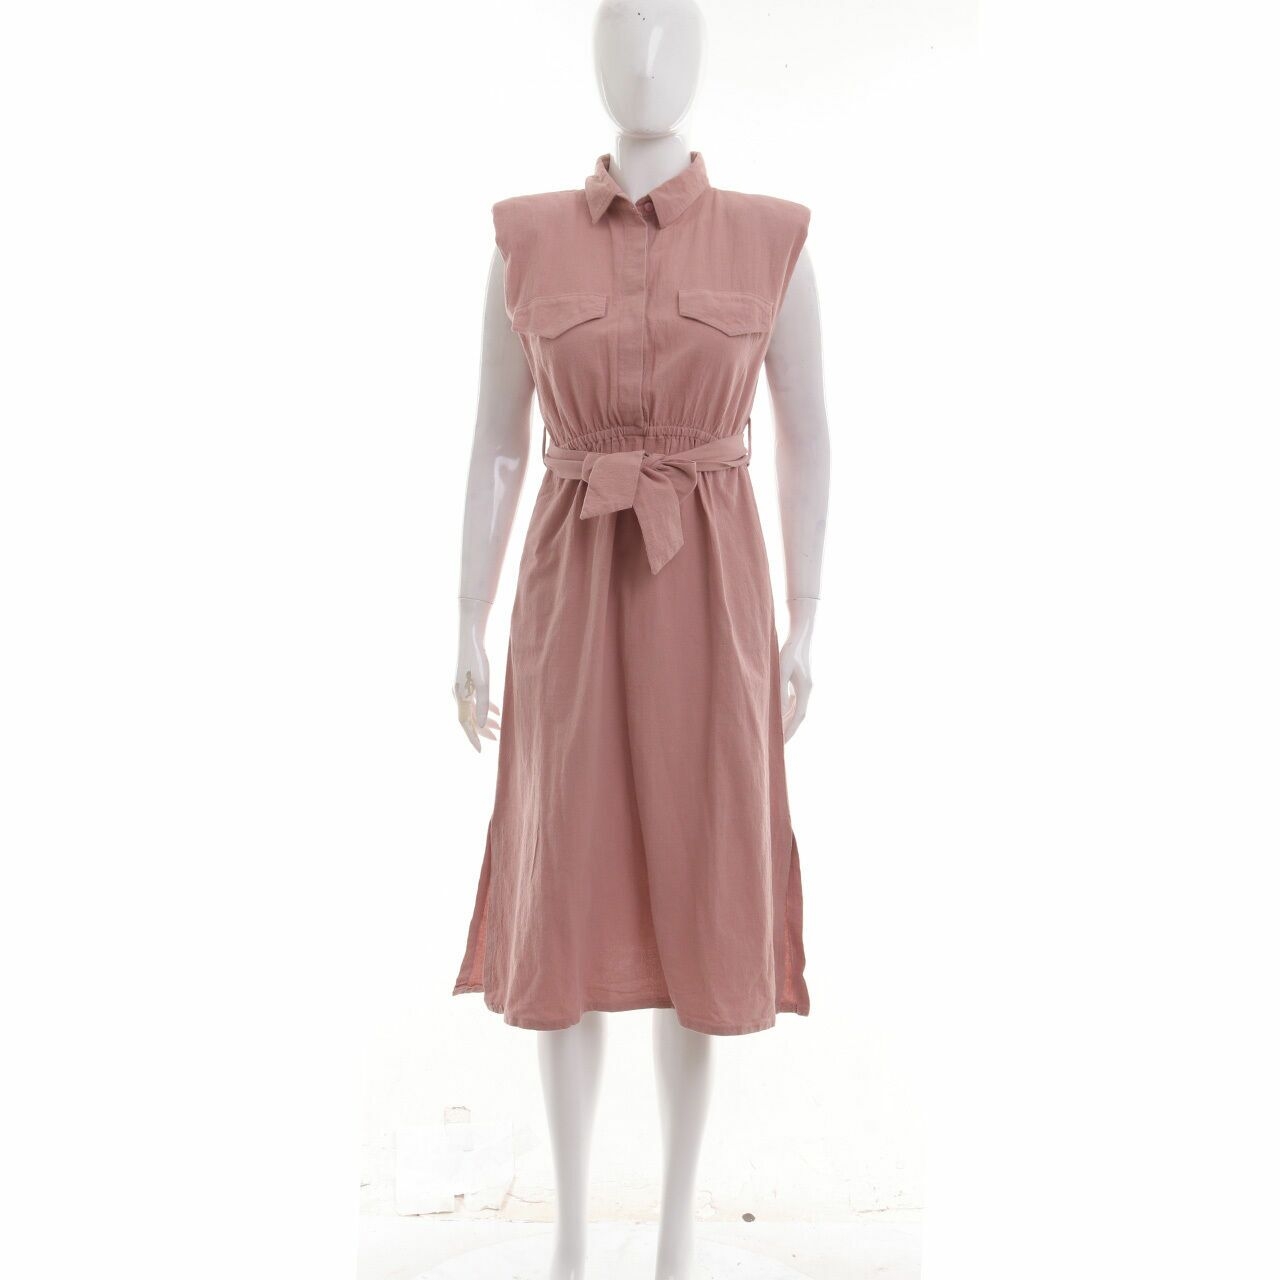 Poise24 Dusty Pink Midi Dress